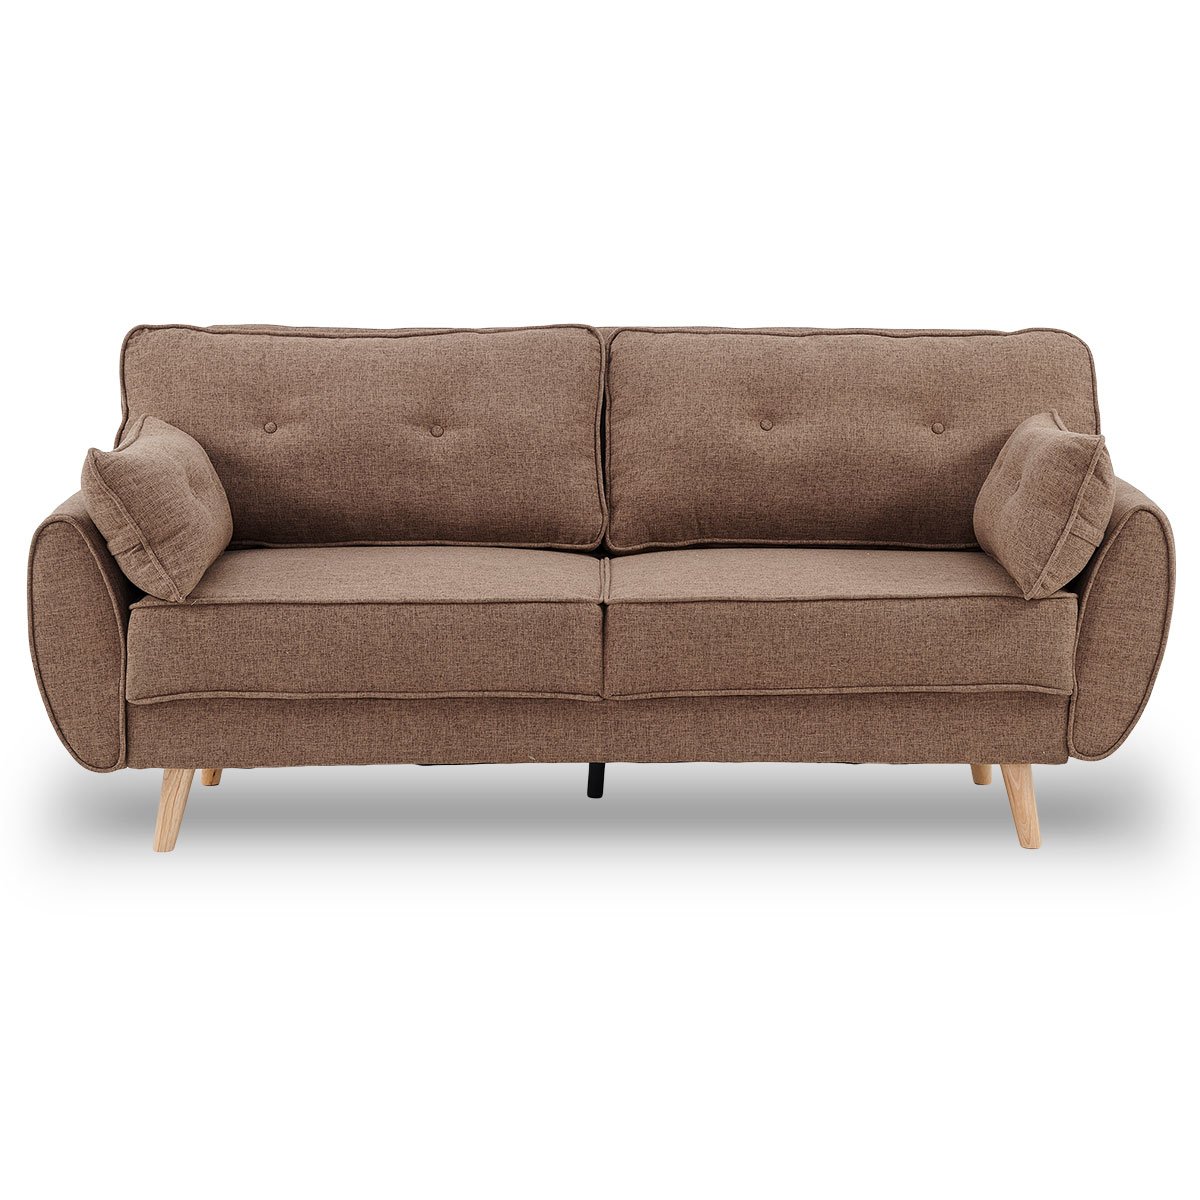 Sarantino 3 Seater Modular Linen Fabric Sofa Bed Couch Futon - Brown 2